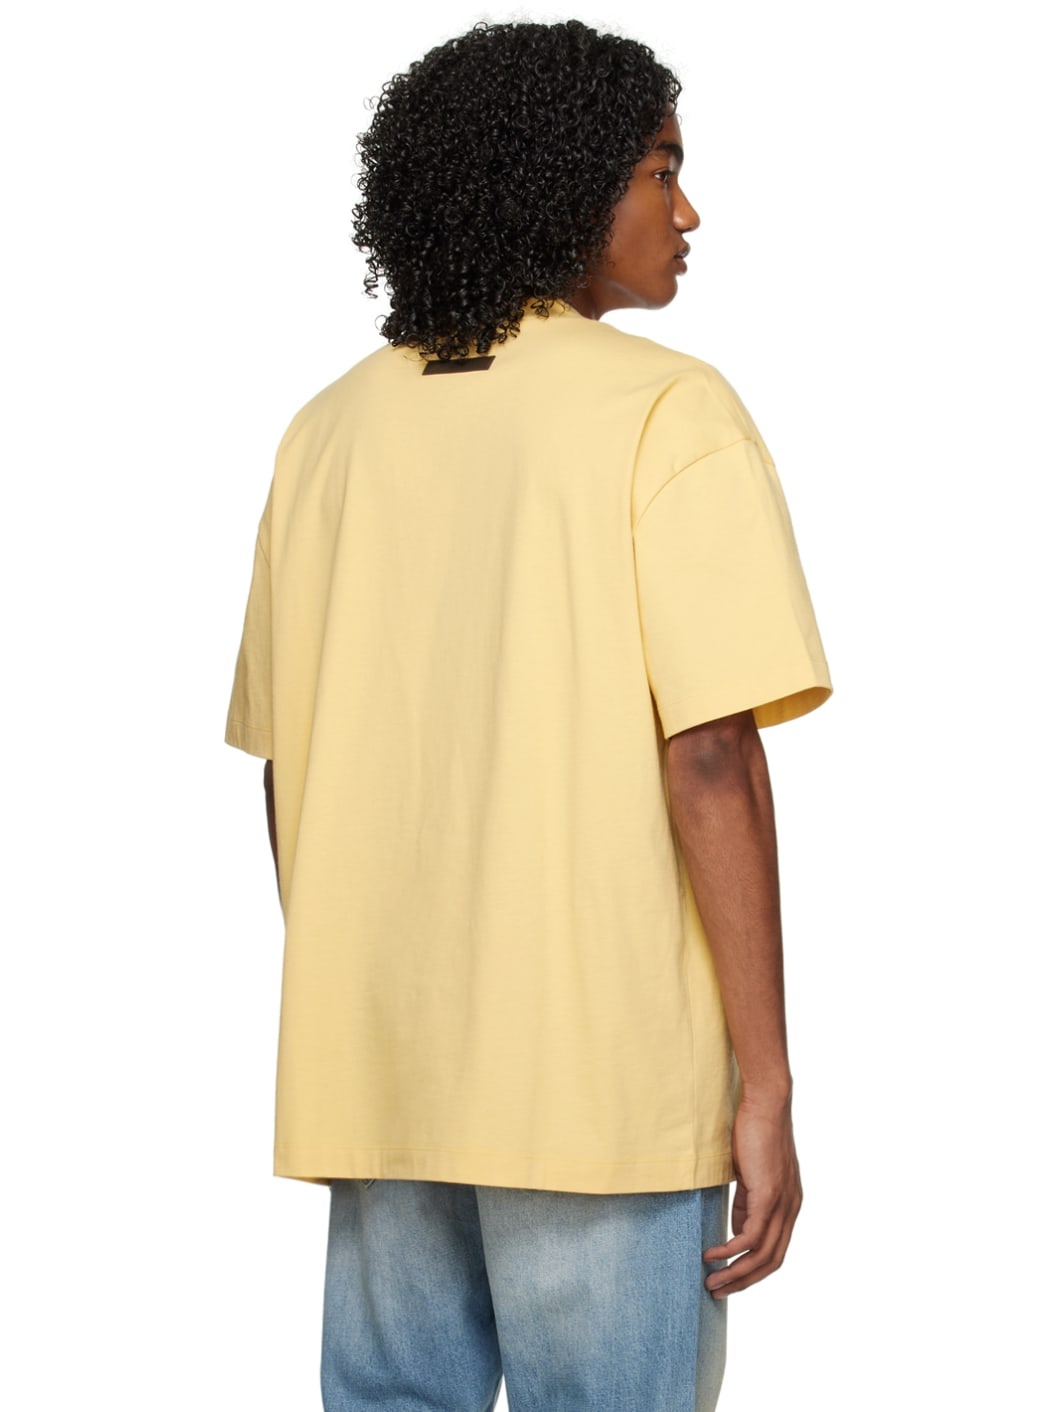 SSENSE Exclusive Yellow T-Shirt - 3